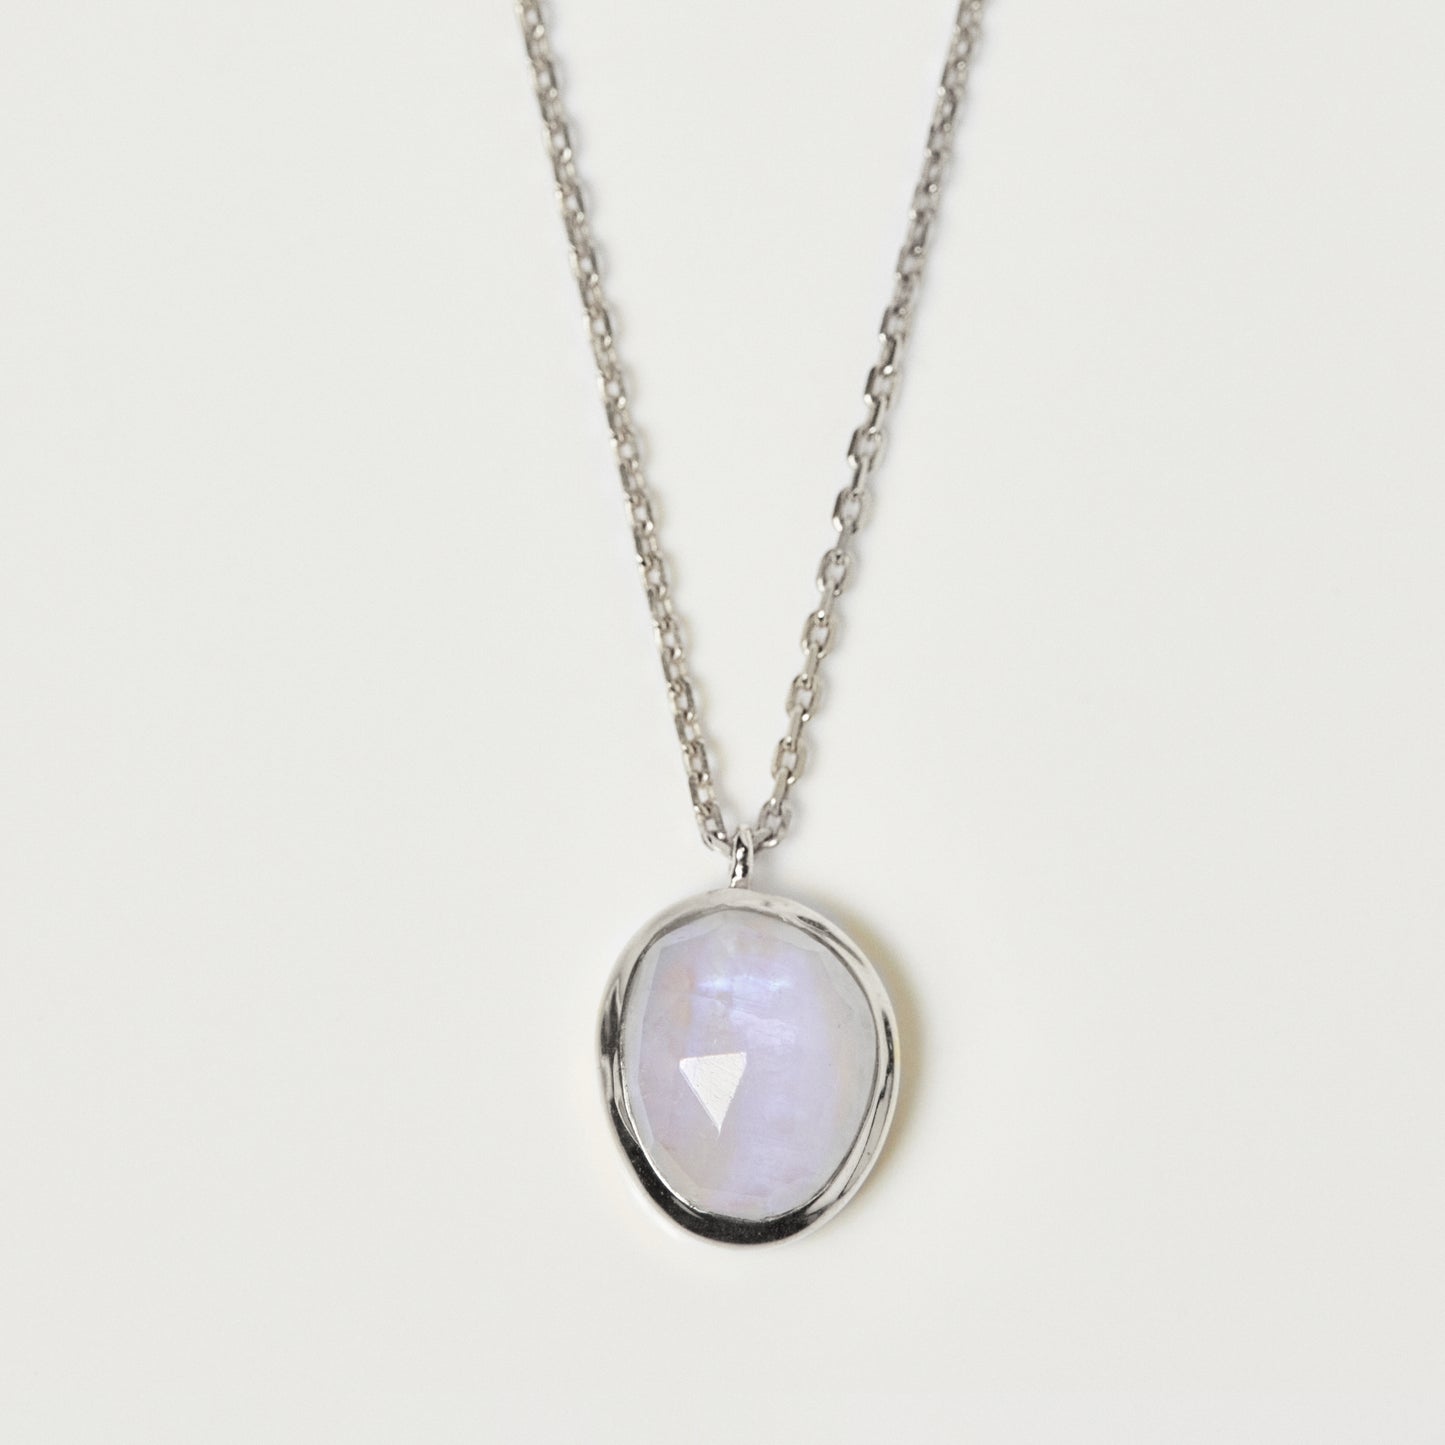 Sterling Silver Semi Precious Stone Pendant in Moonstone - Necklace - Carrie Elizabeth